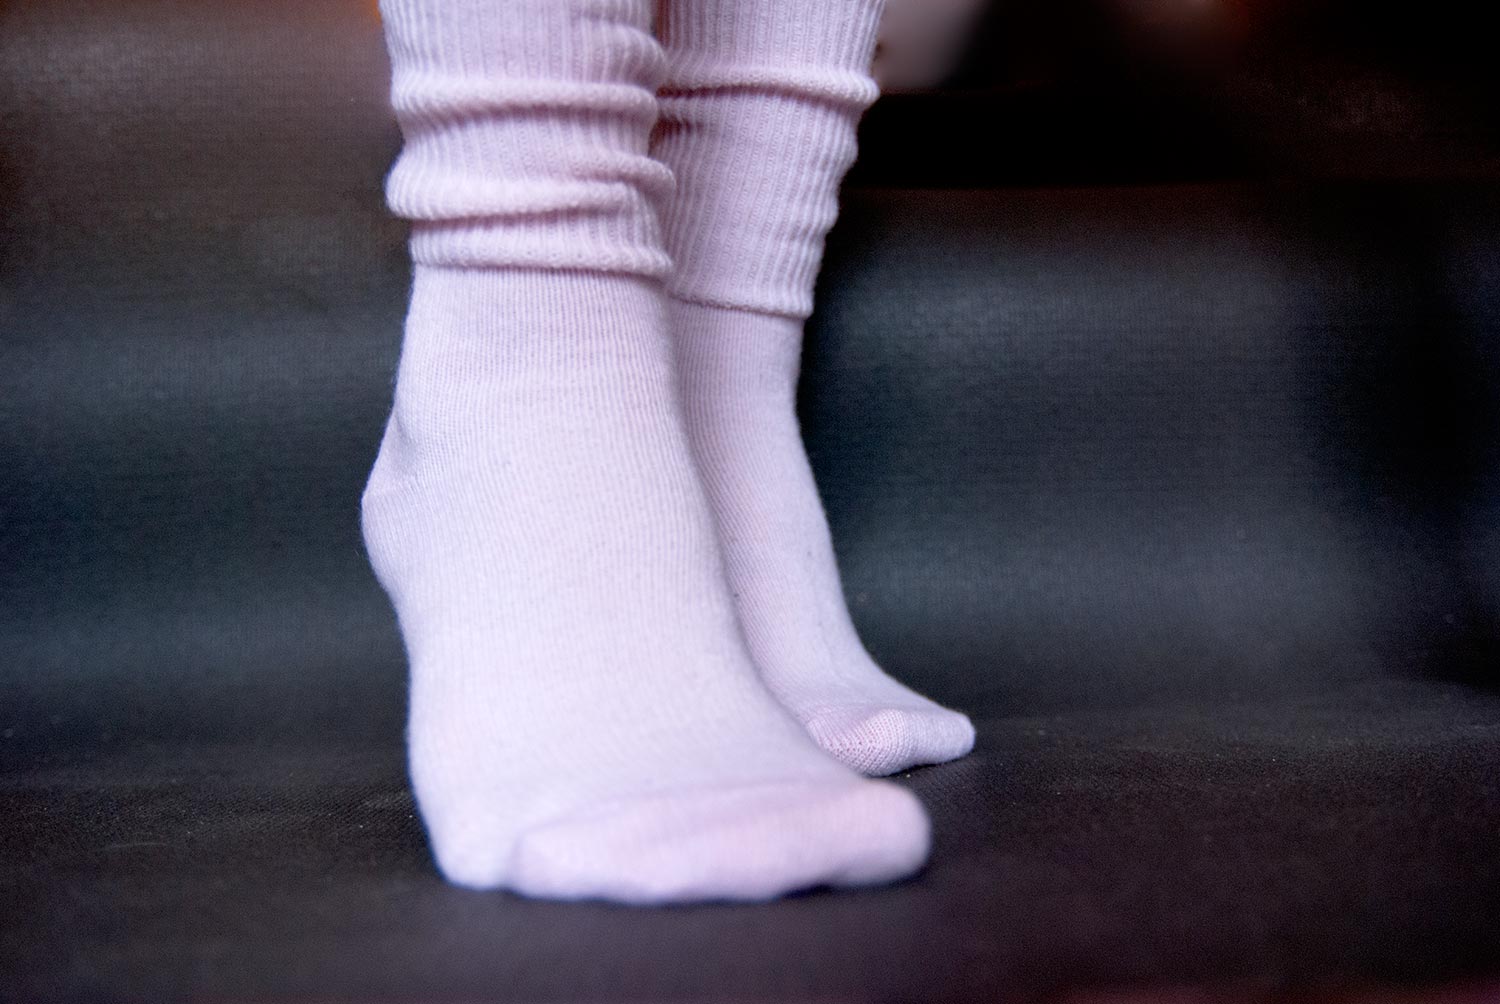 Тёплые носки MiNiMi. Изображение ©bracatuS.com